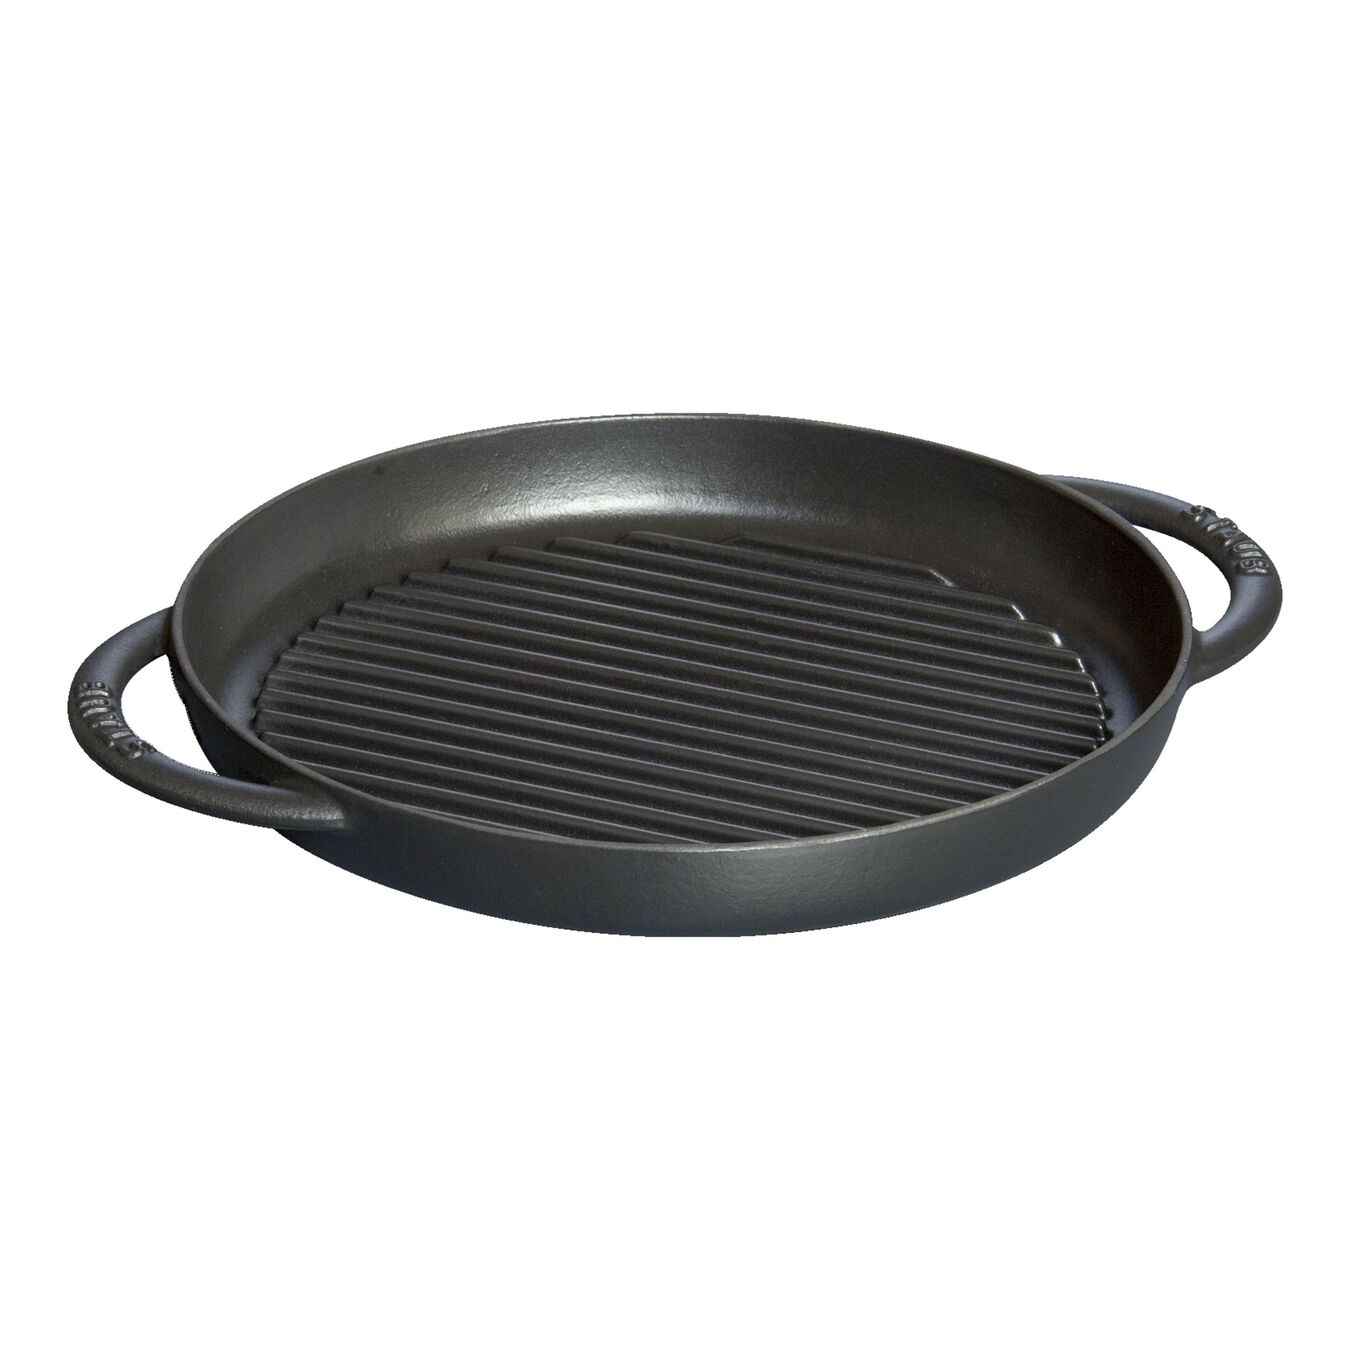 26 cm cast iron round Pure Grill, black,,large 1